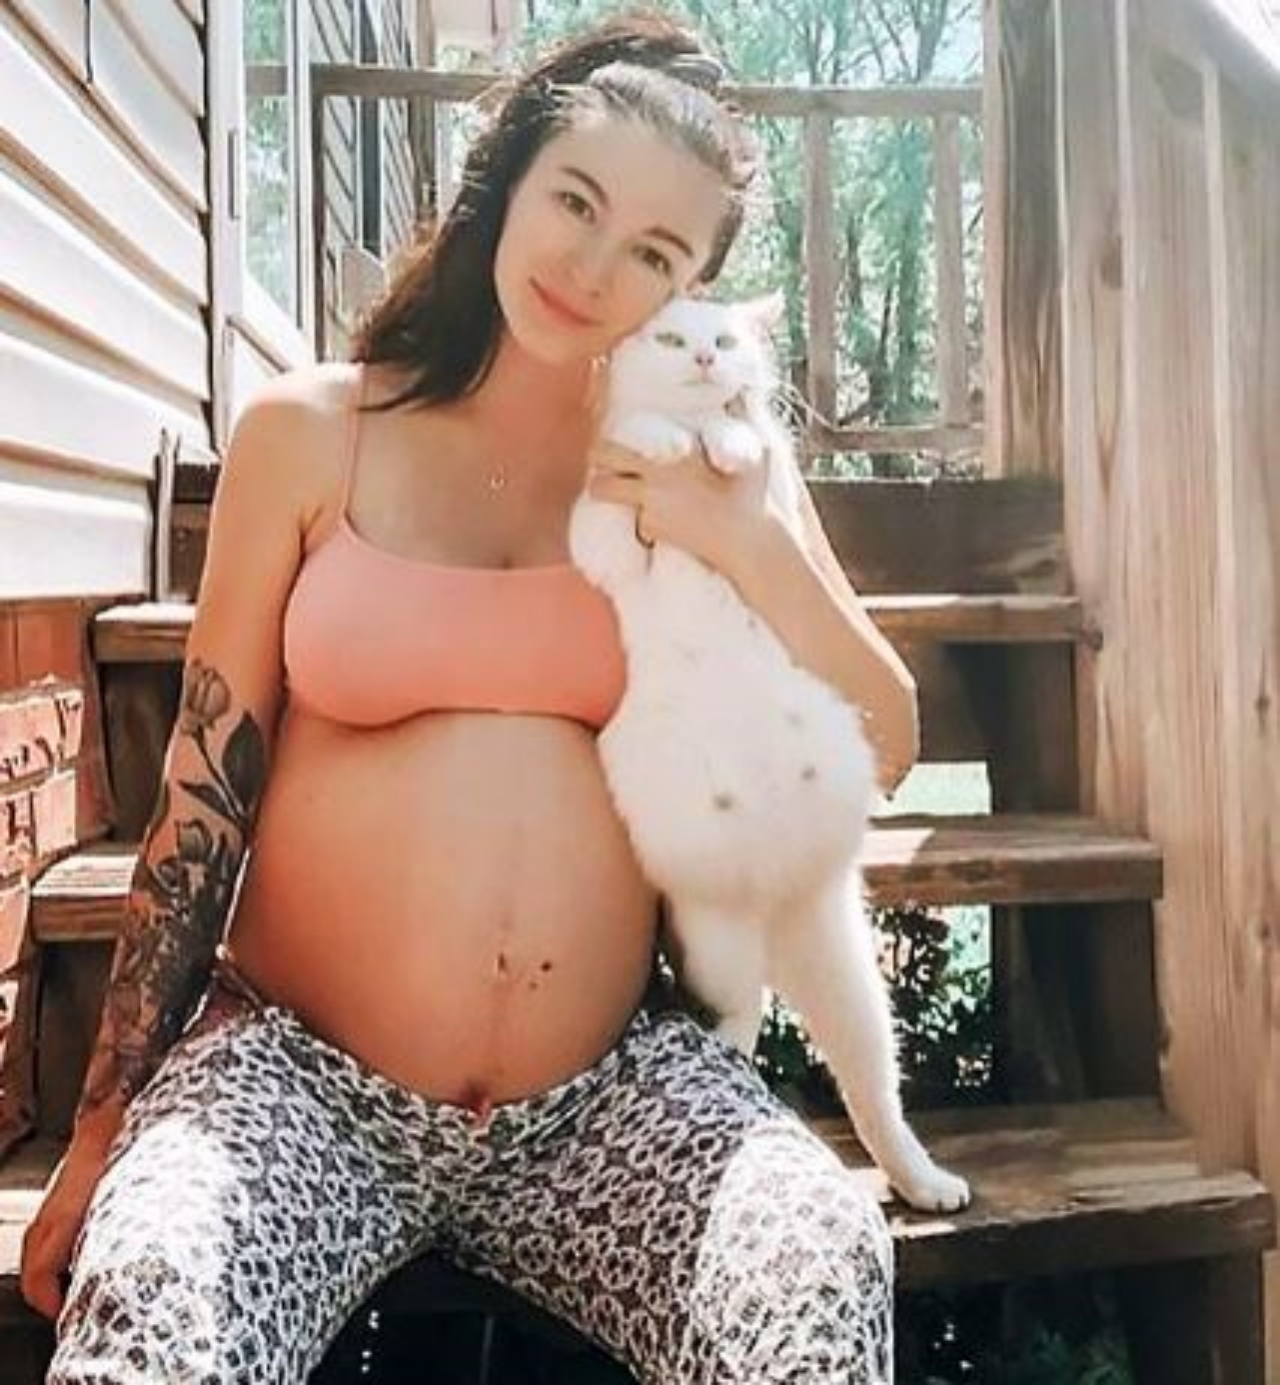 un gatto bianco insieme ad una donna incinta